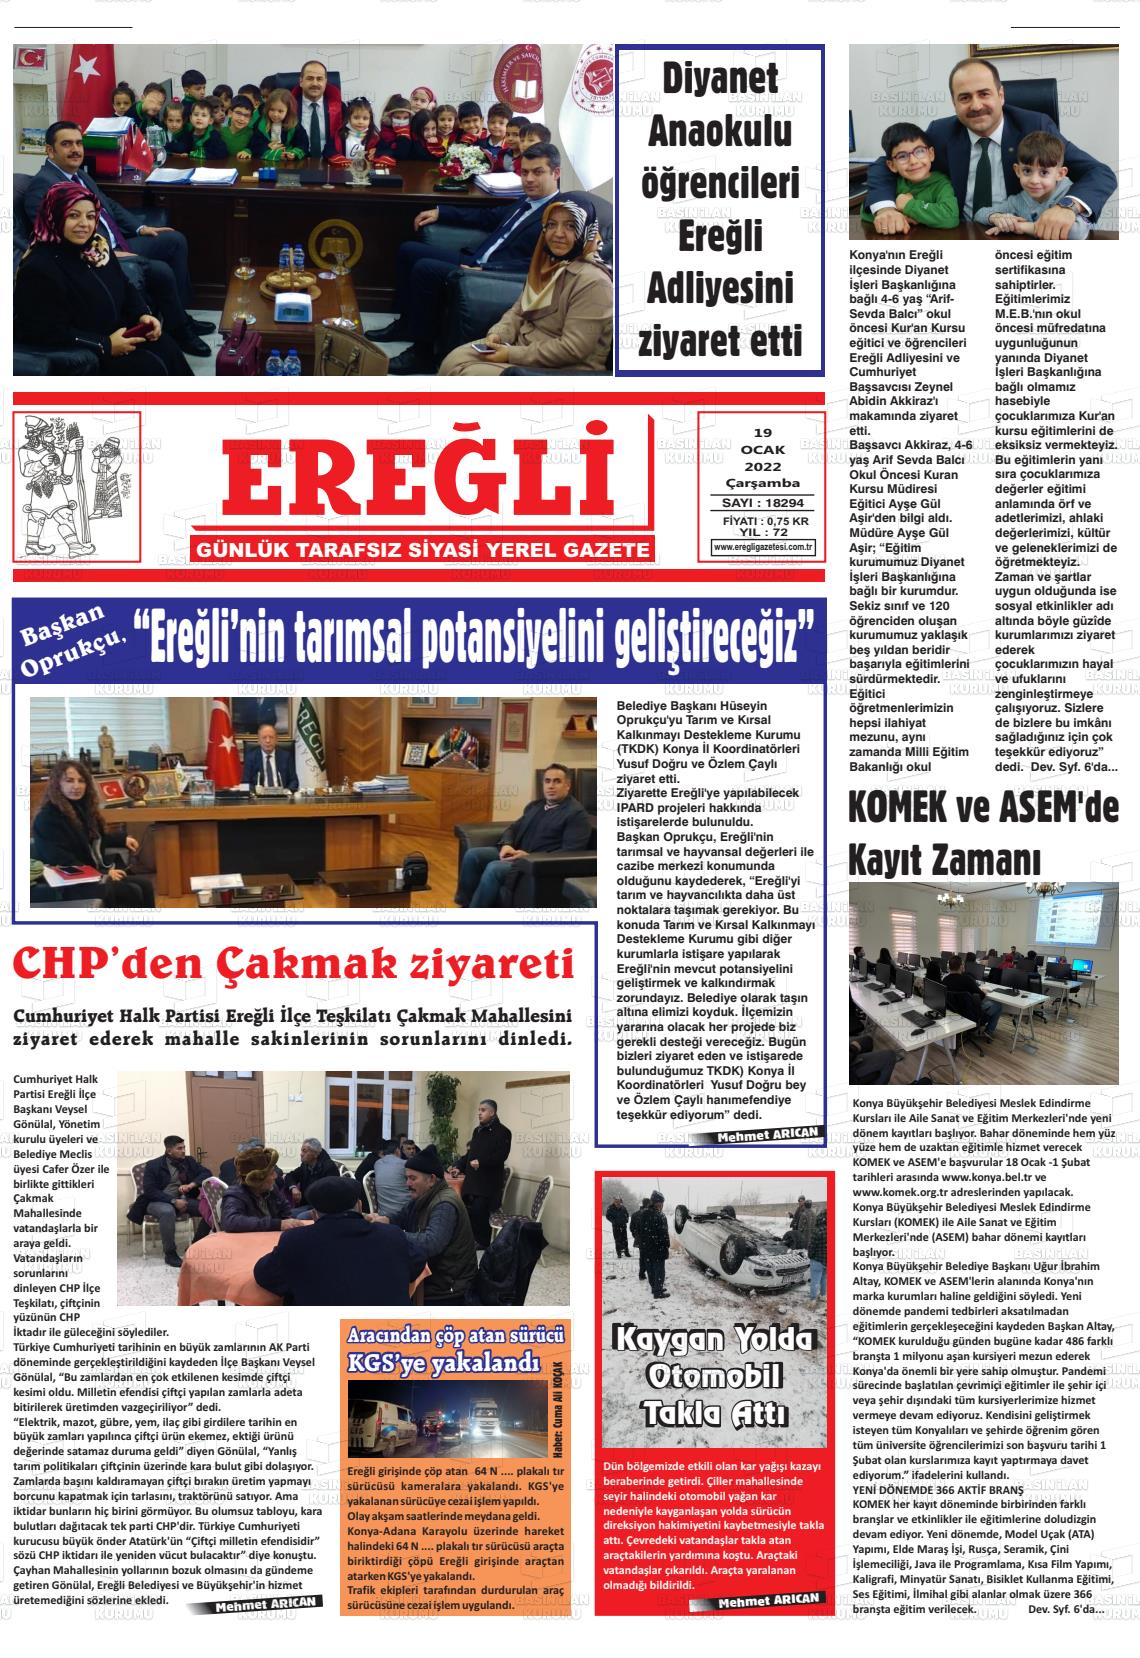 19 Ocak 2022 Ereğli Gazete Manşeti